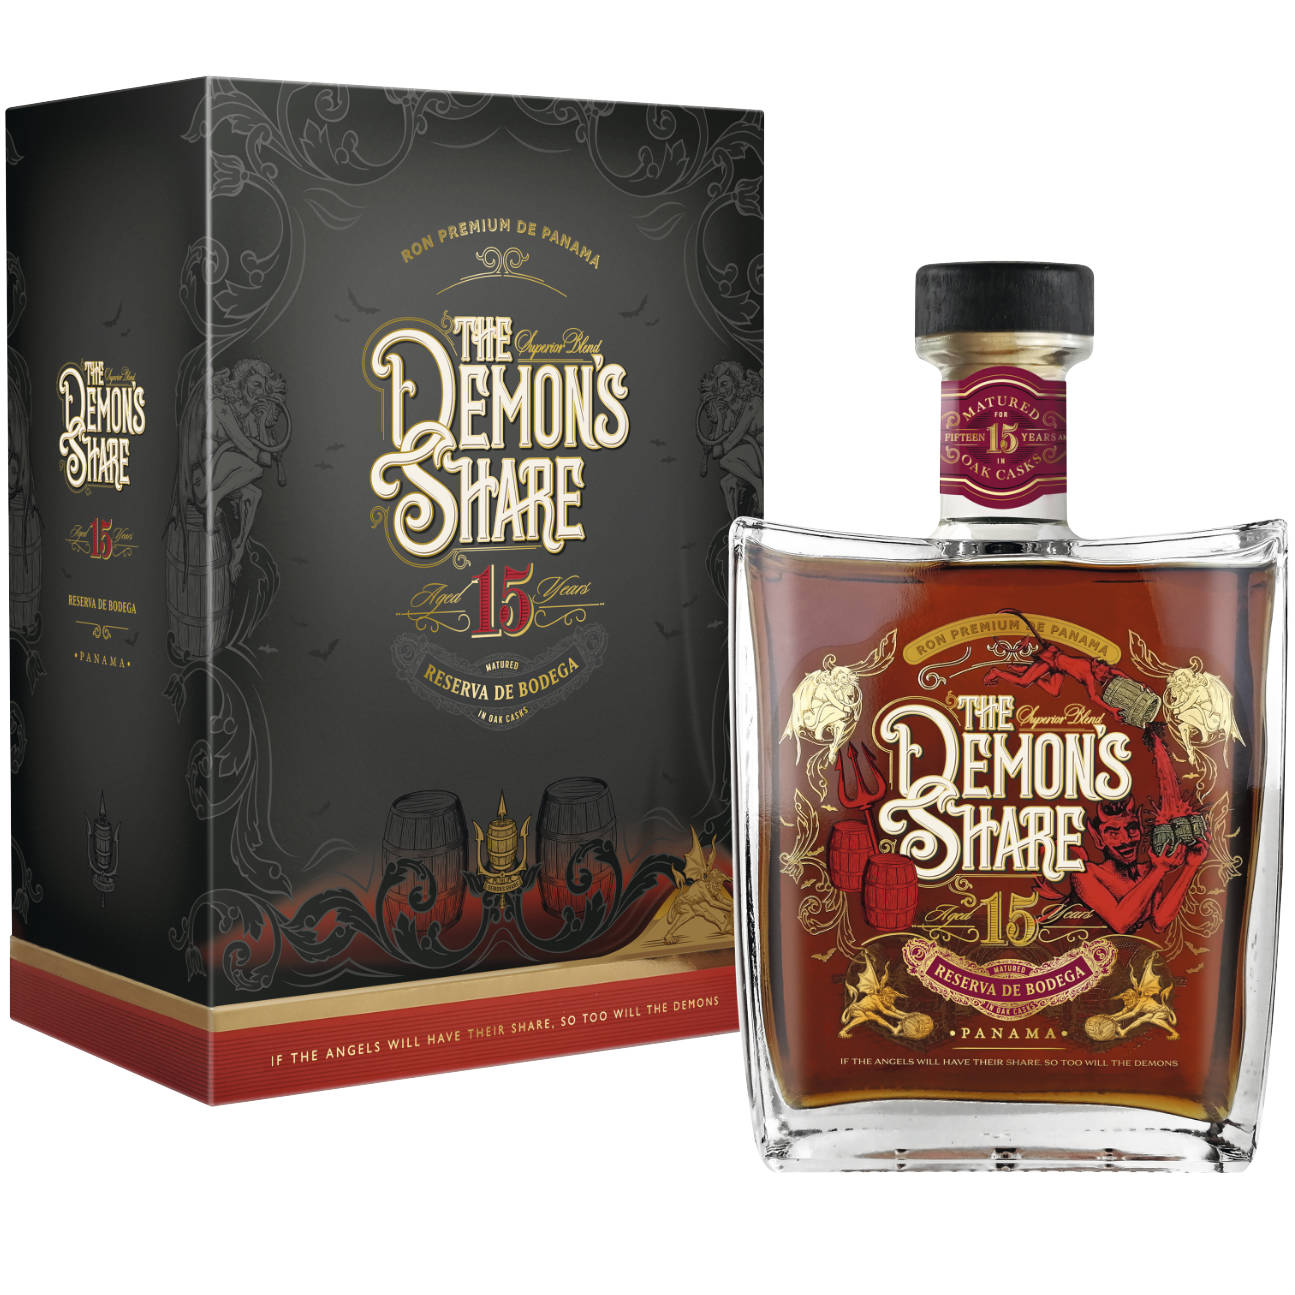 The Demons Share Rum 15 Jahre gereift 43% vol. 0,7l in edler Geschenkbox